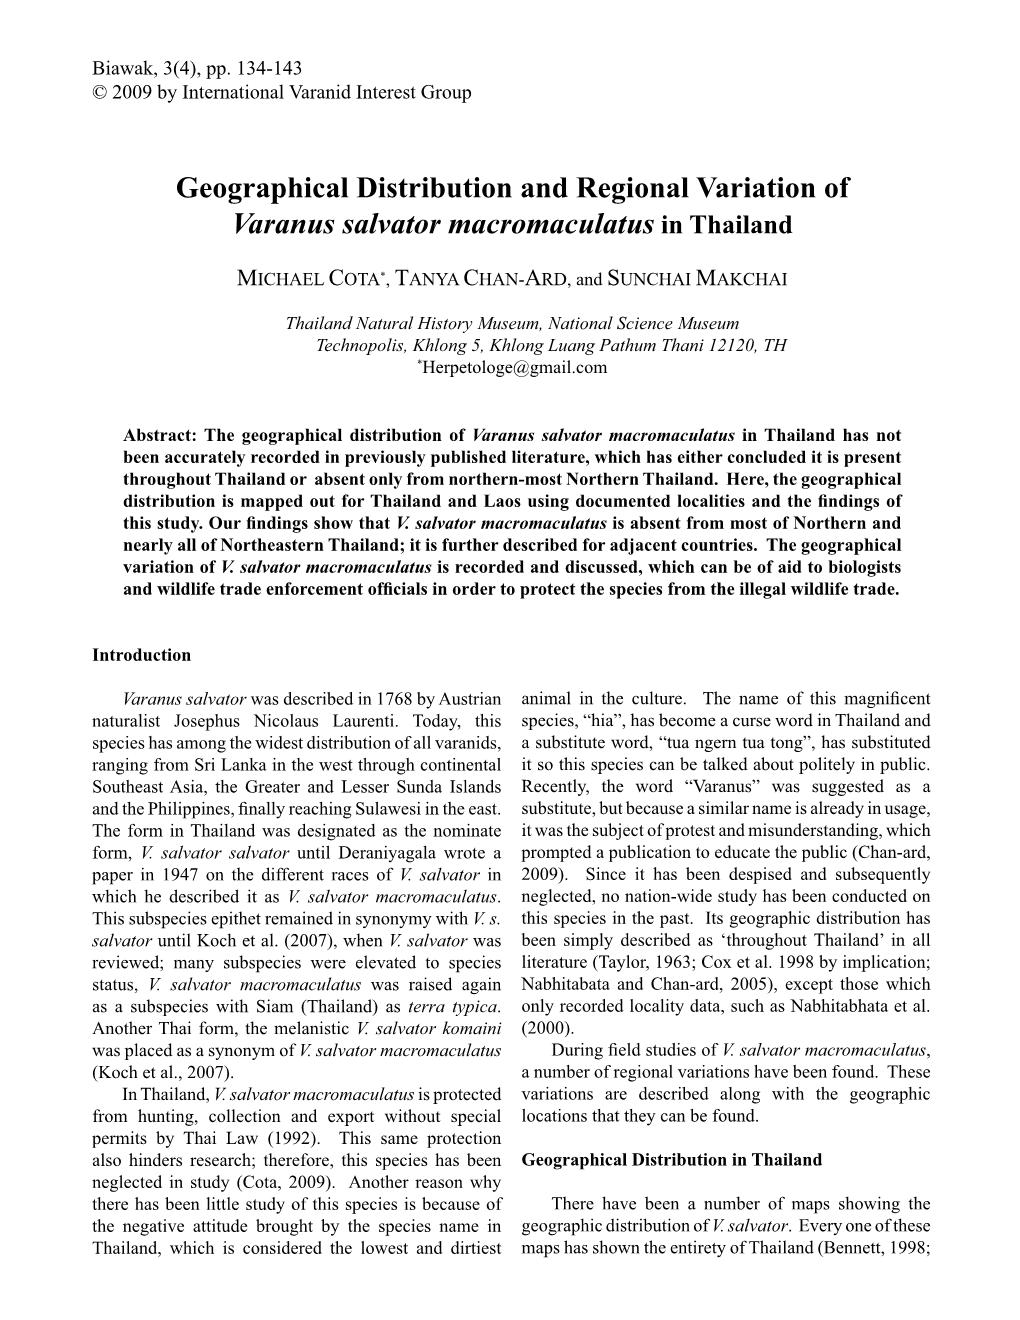 Geographical Distribution and Regional Variation of Varanus Salvator Macromaculatus in Thailand